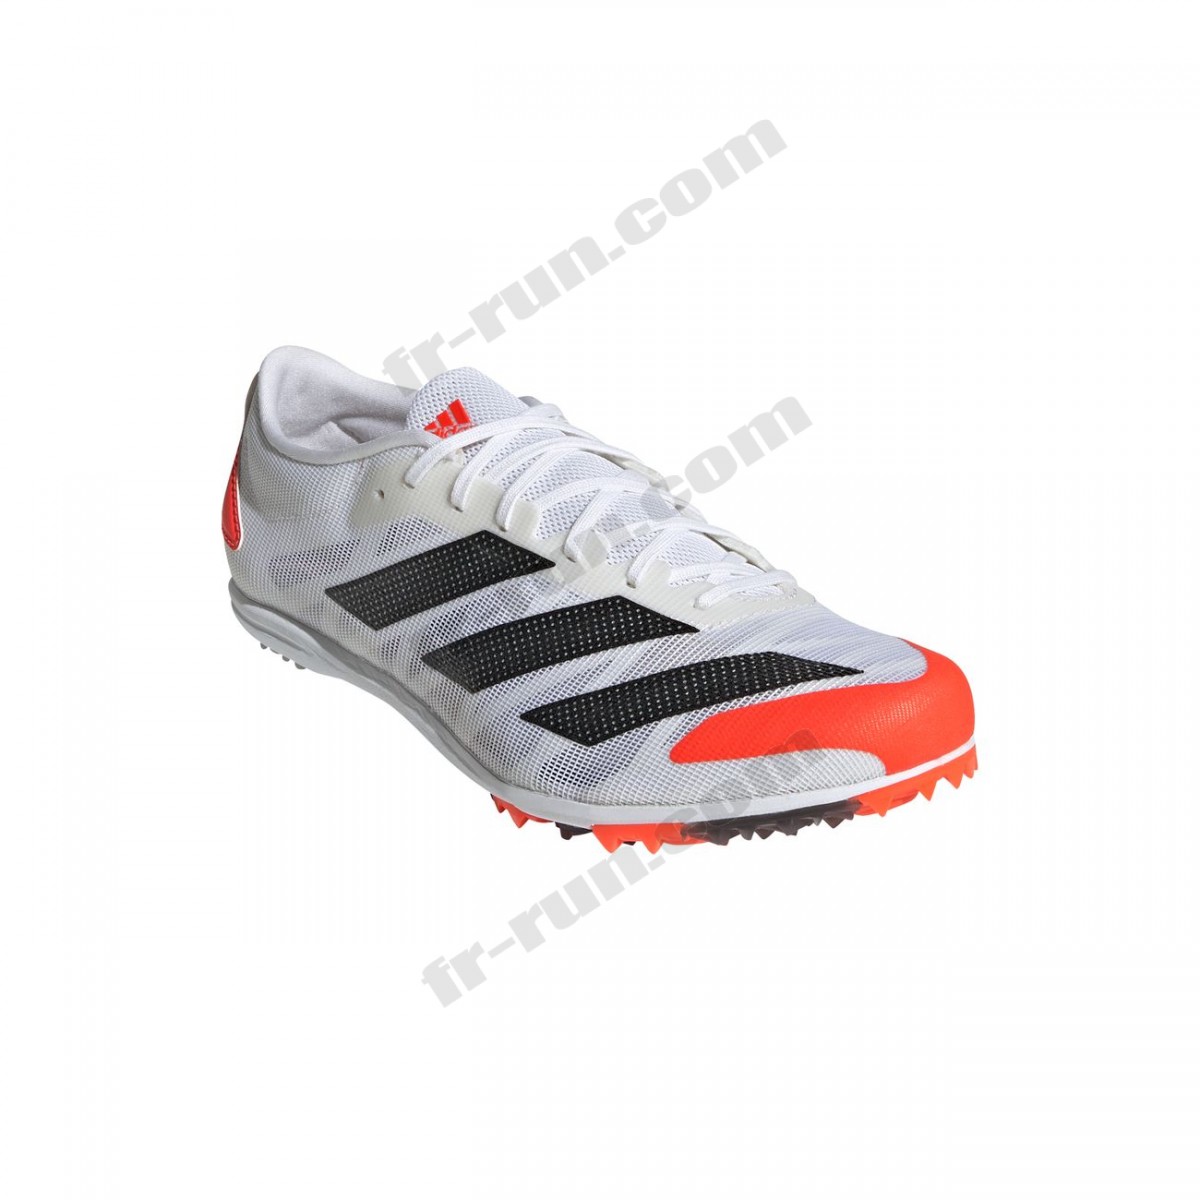 Adidas/Athlétisme adulte ADIDAS Chaussures adidas Adizero XCS √ Nouveau style √ Soldes - -9